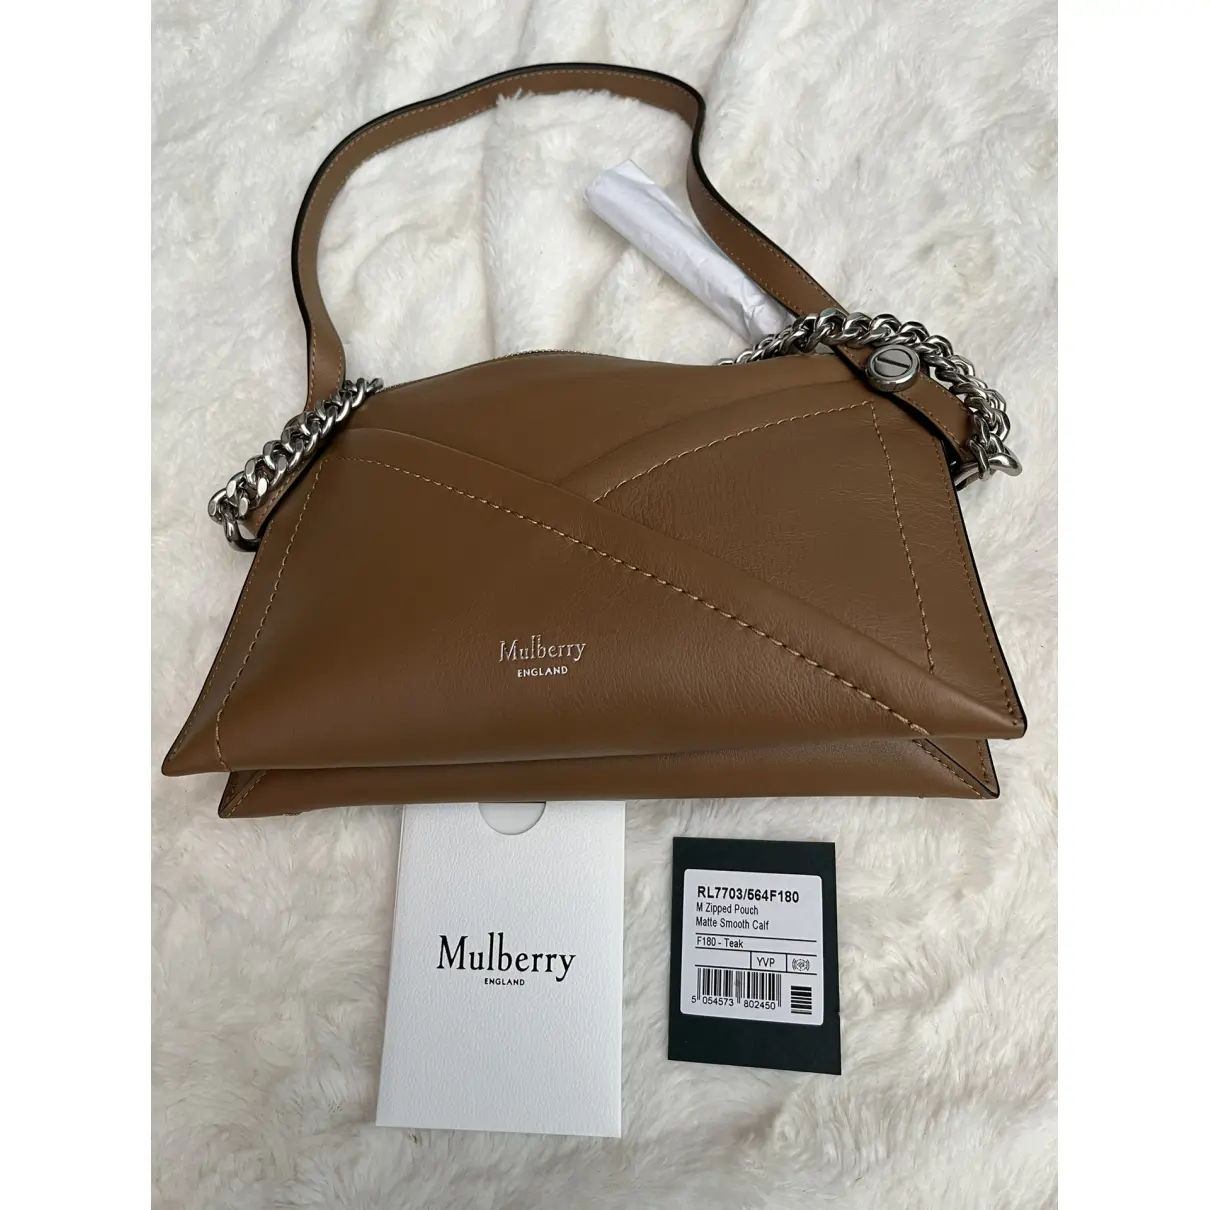 Darley leather handbag Mulberry